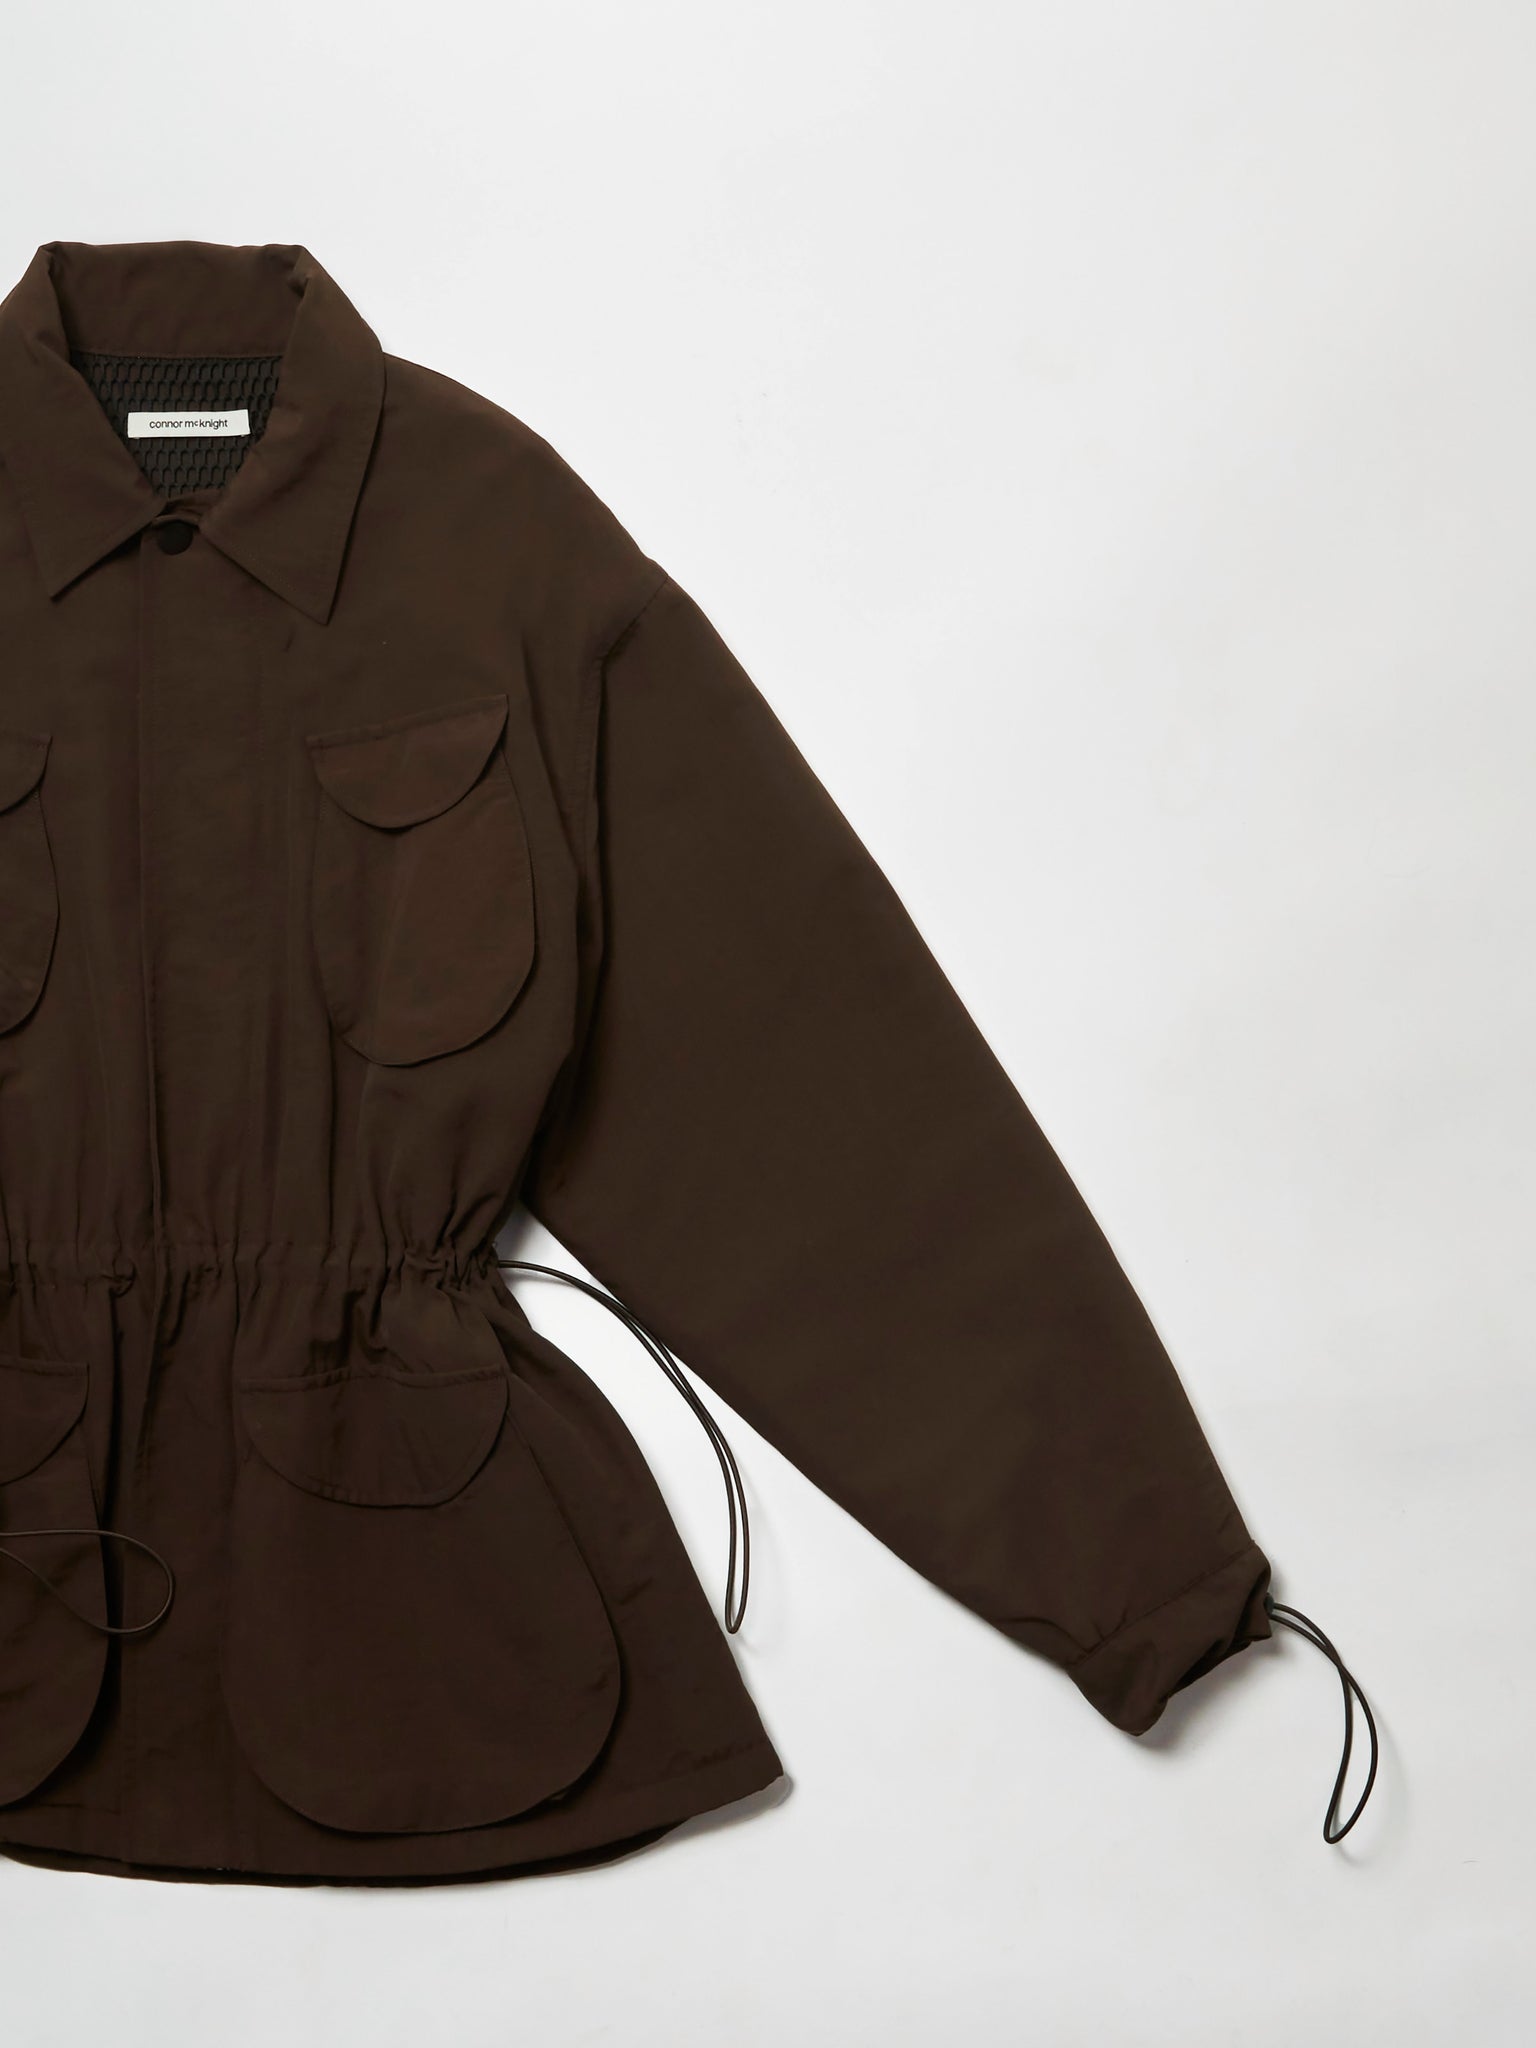 nylon M65 jacket - brown